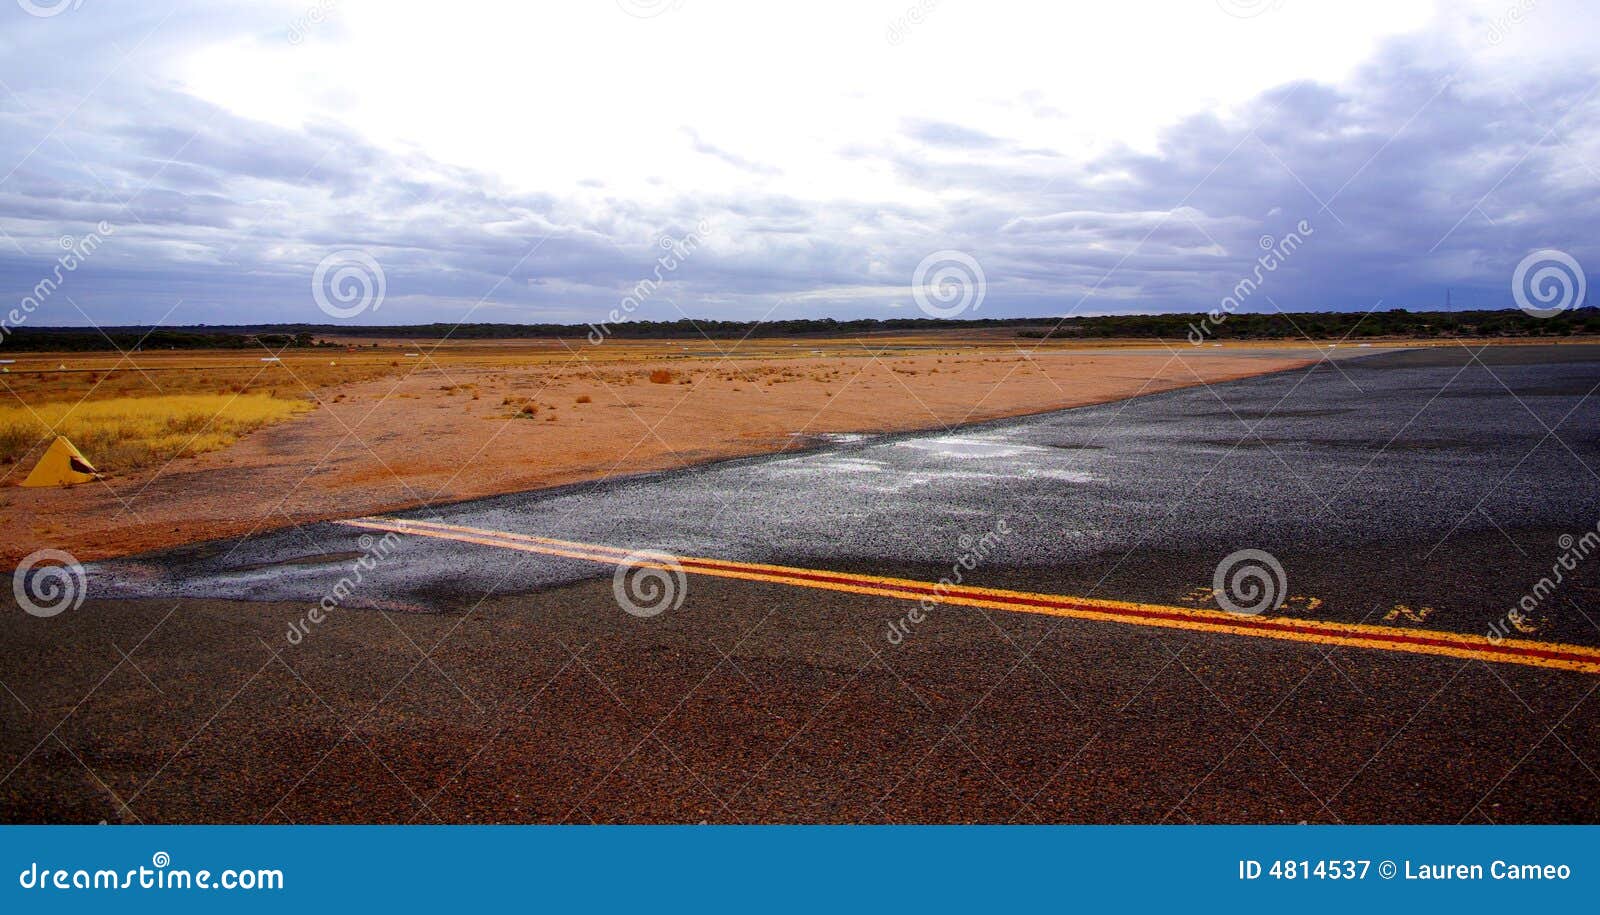 renmark airfield